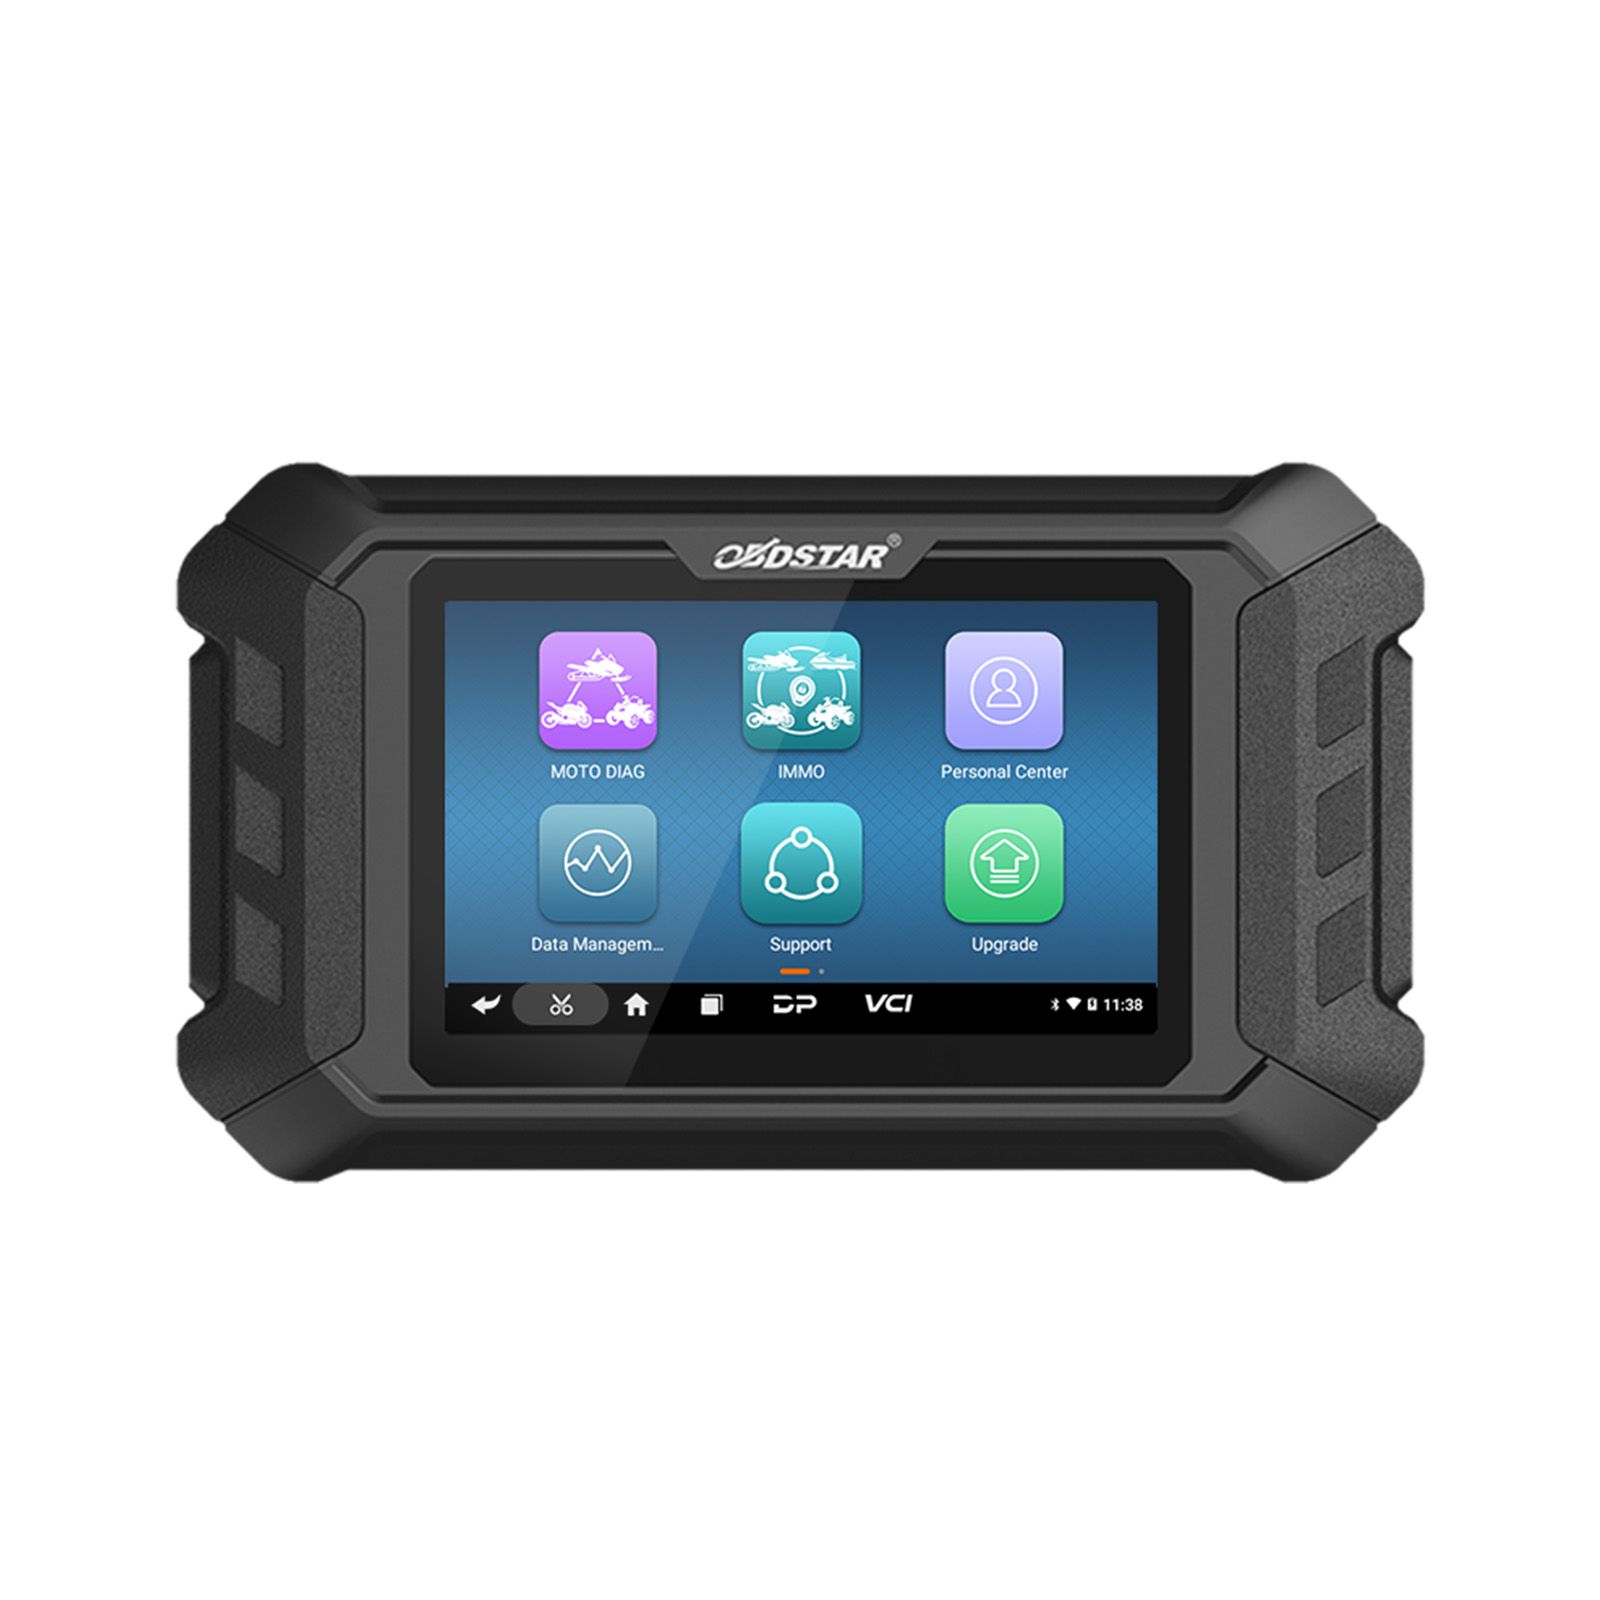 Obdstar iscan KTM / husqvarna intelligent outil de diagnostic de moto tablette portable